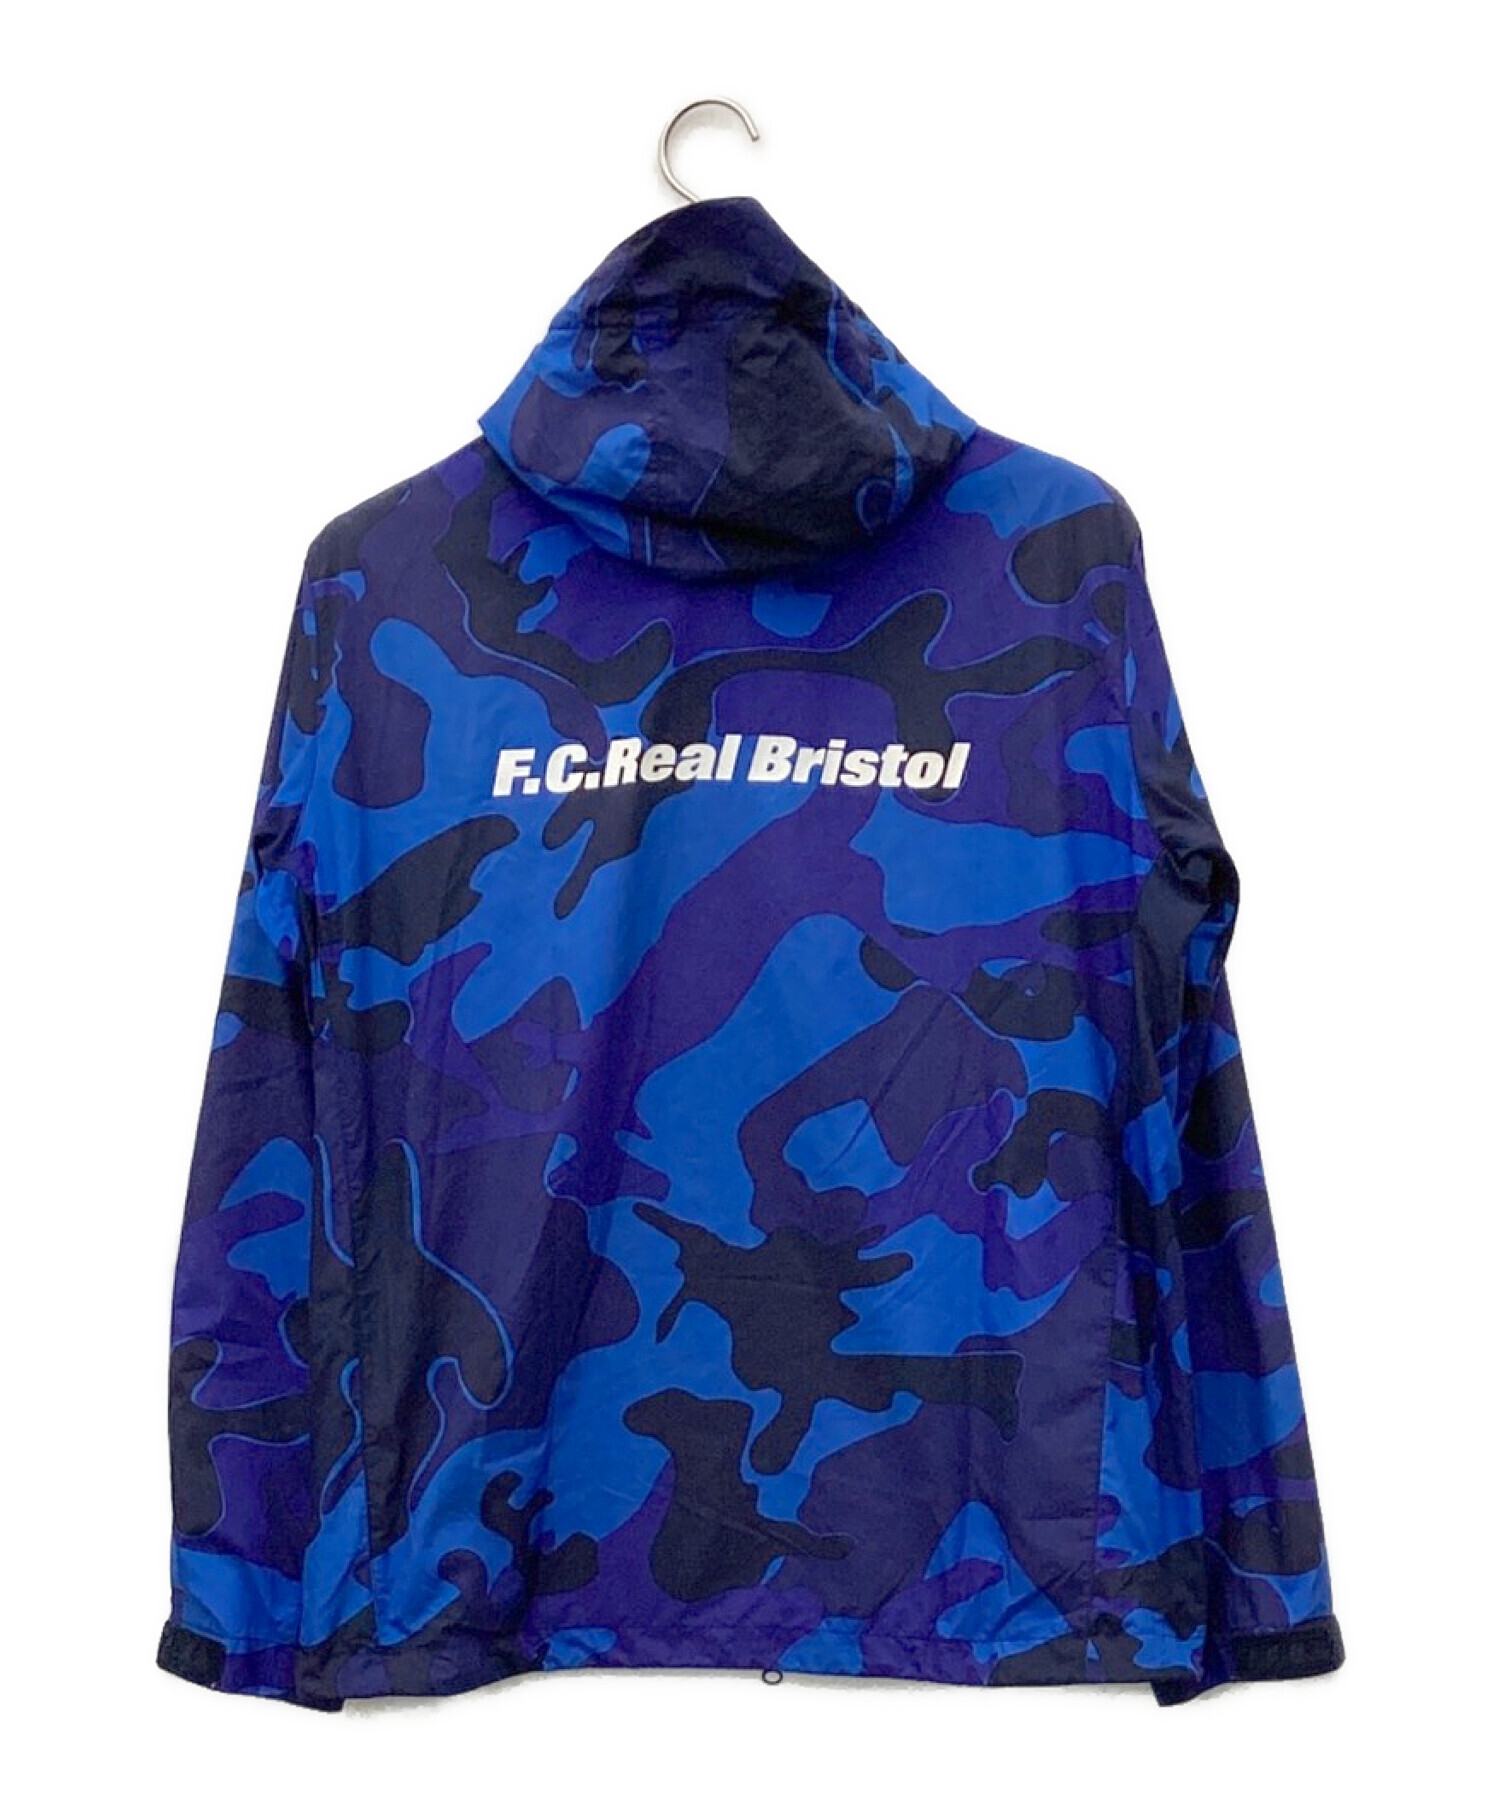 NIKE (ナイキ) F.C. REAL BRISTOL CAMOジャケット ネイビー×ブルー サイズ:L